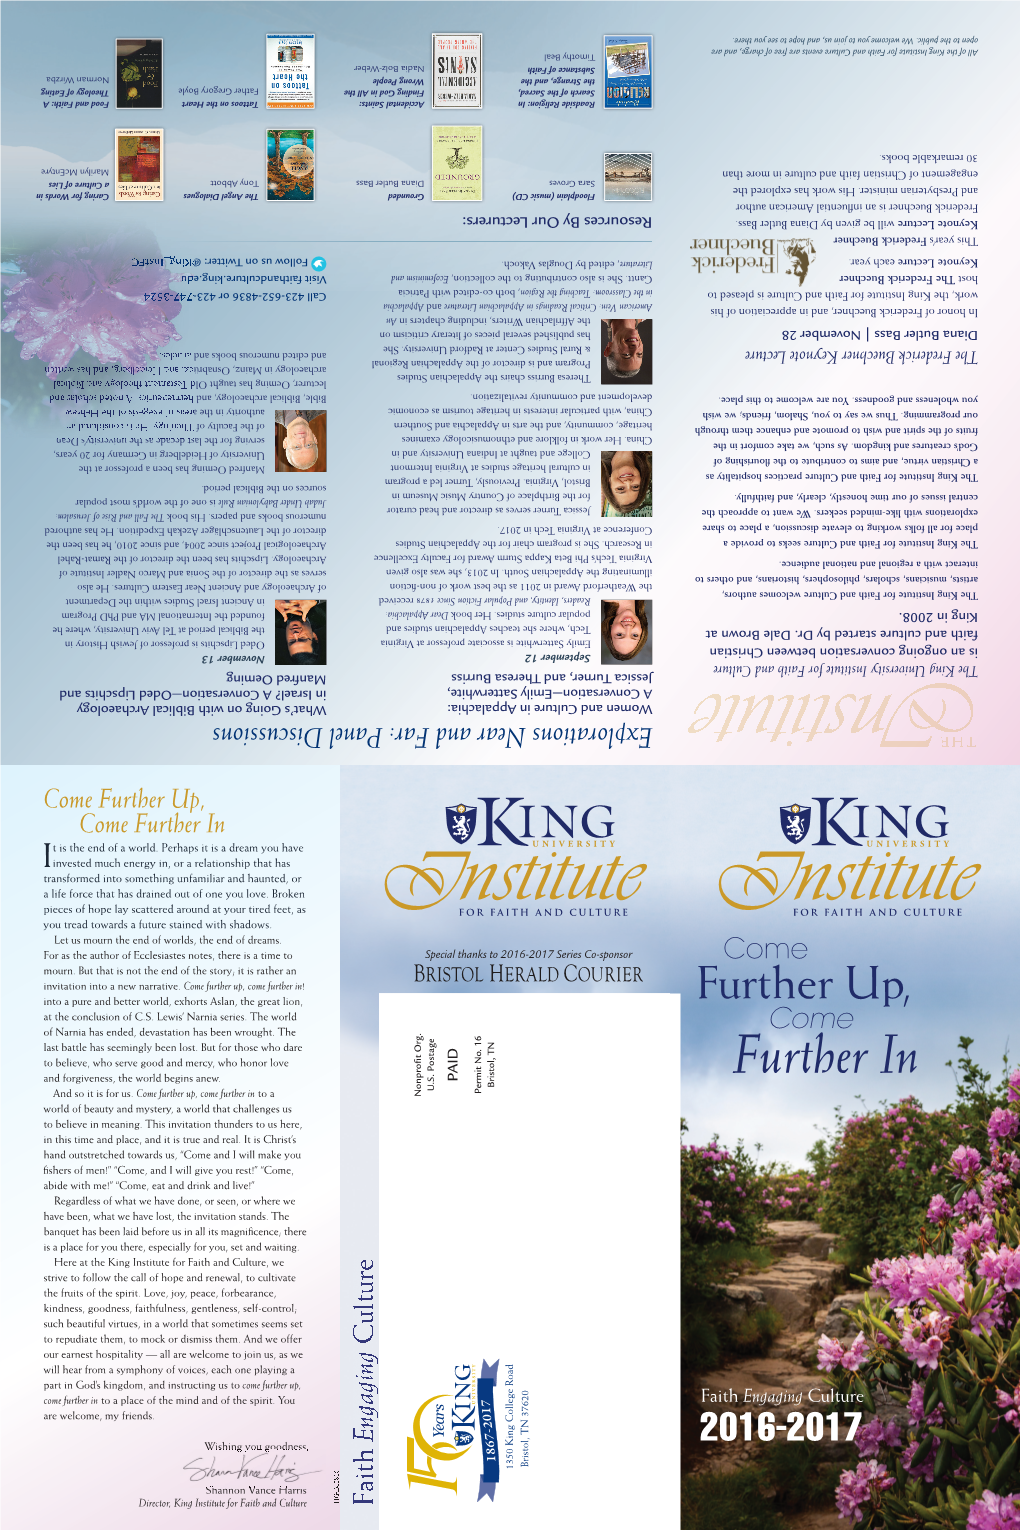 KNG16004 King Institute Brochure-4.Indd